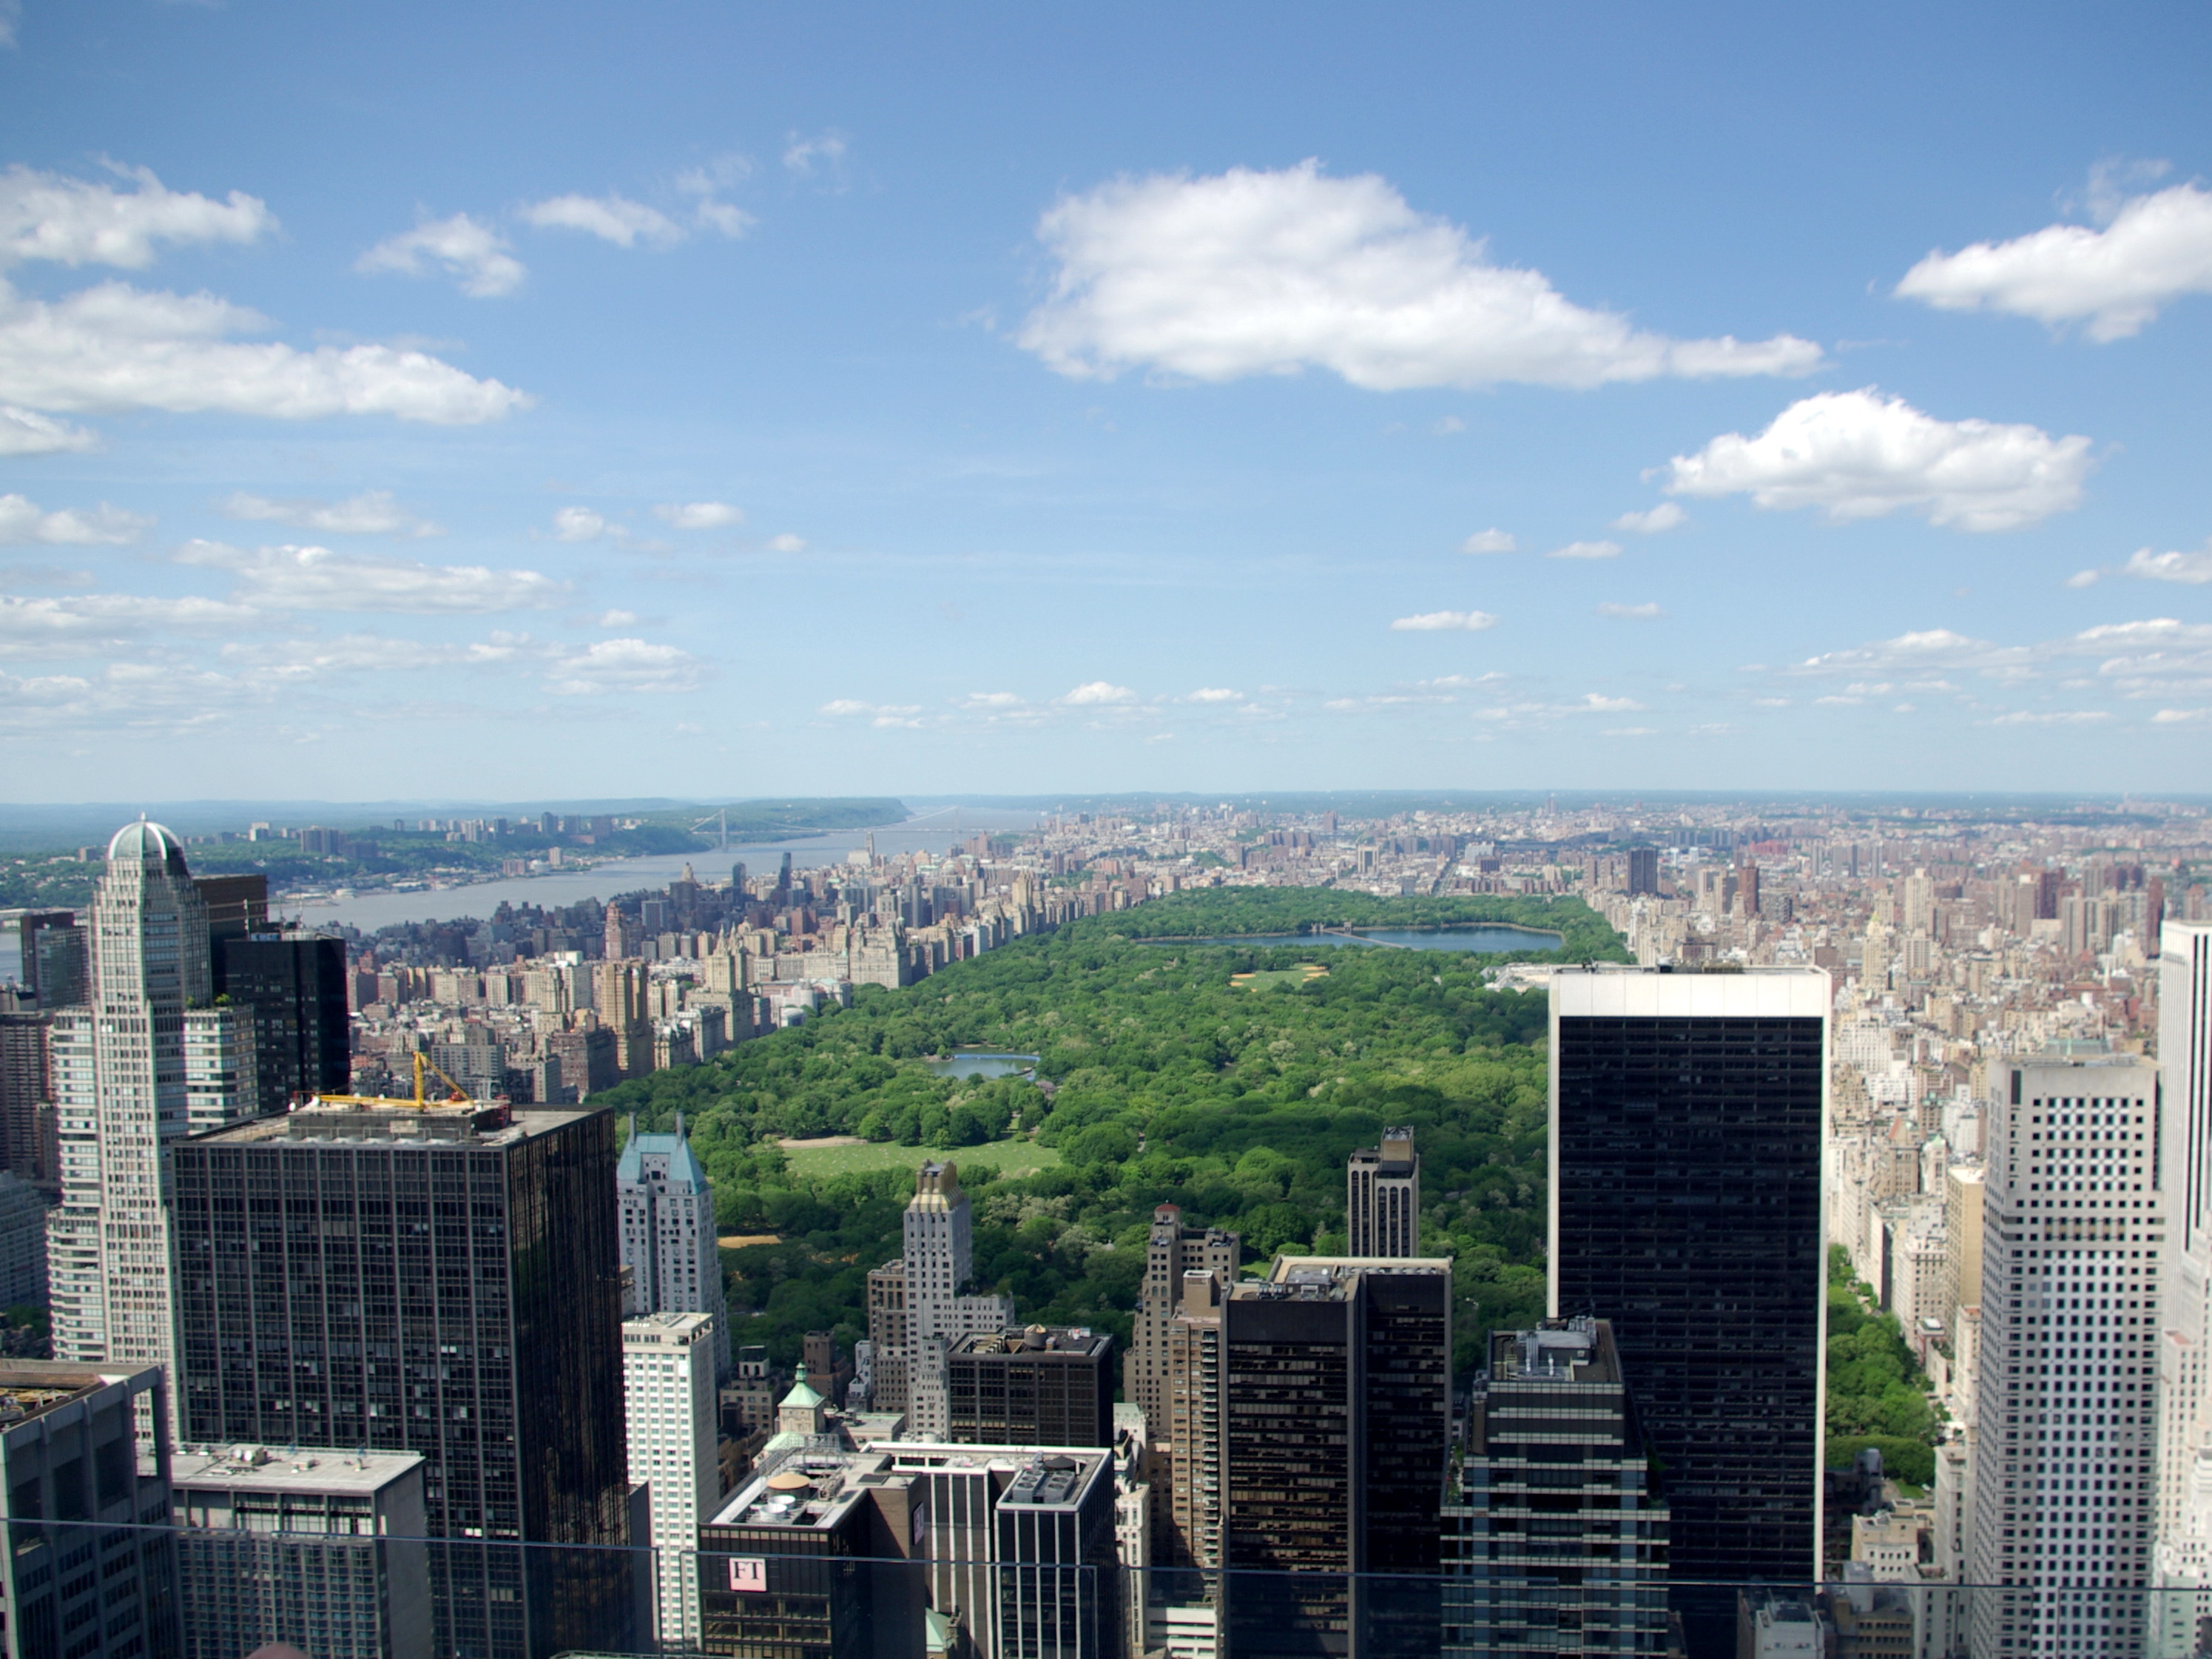 Image of Central Park seen from Rockefeller Center.